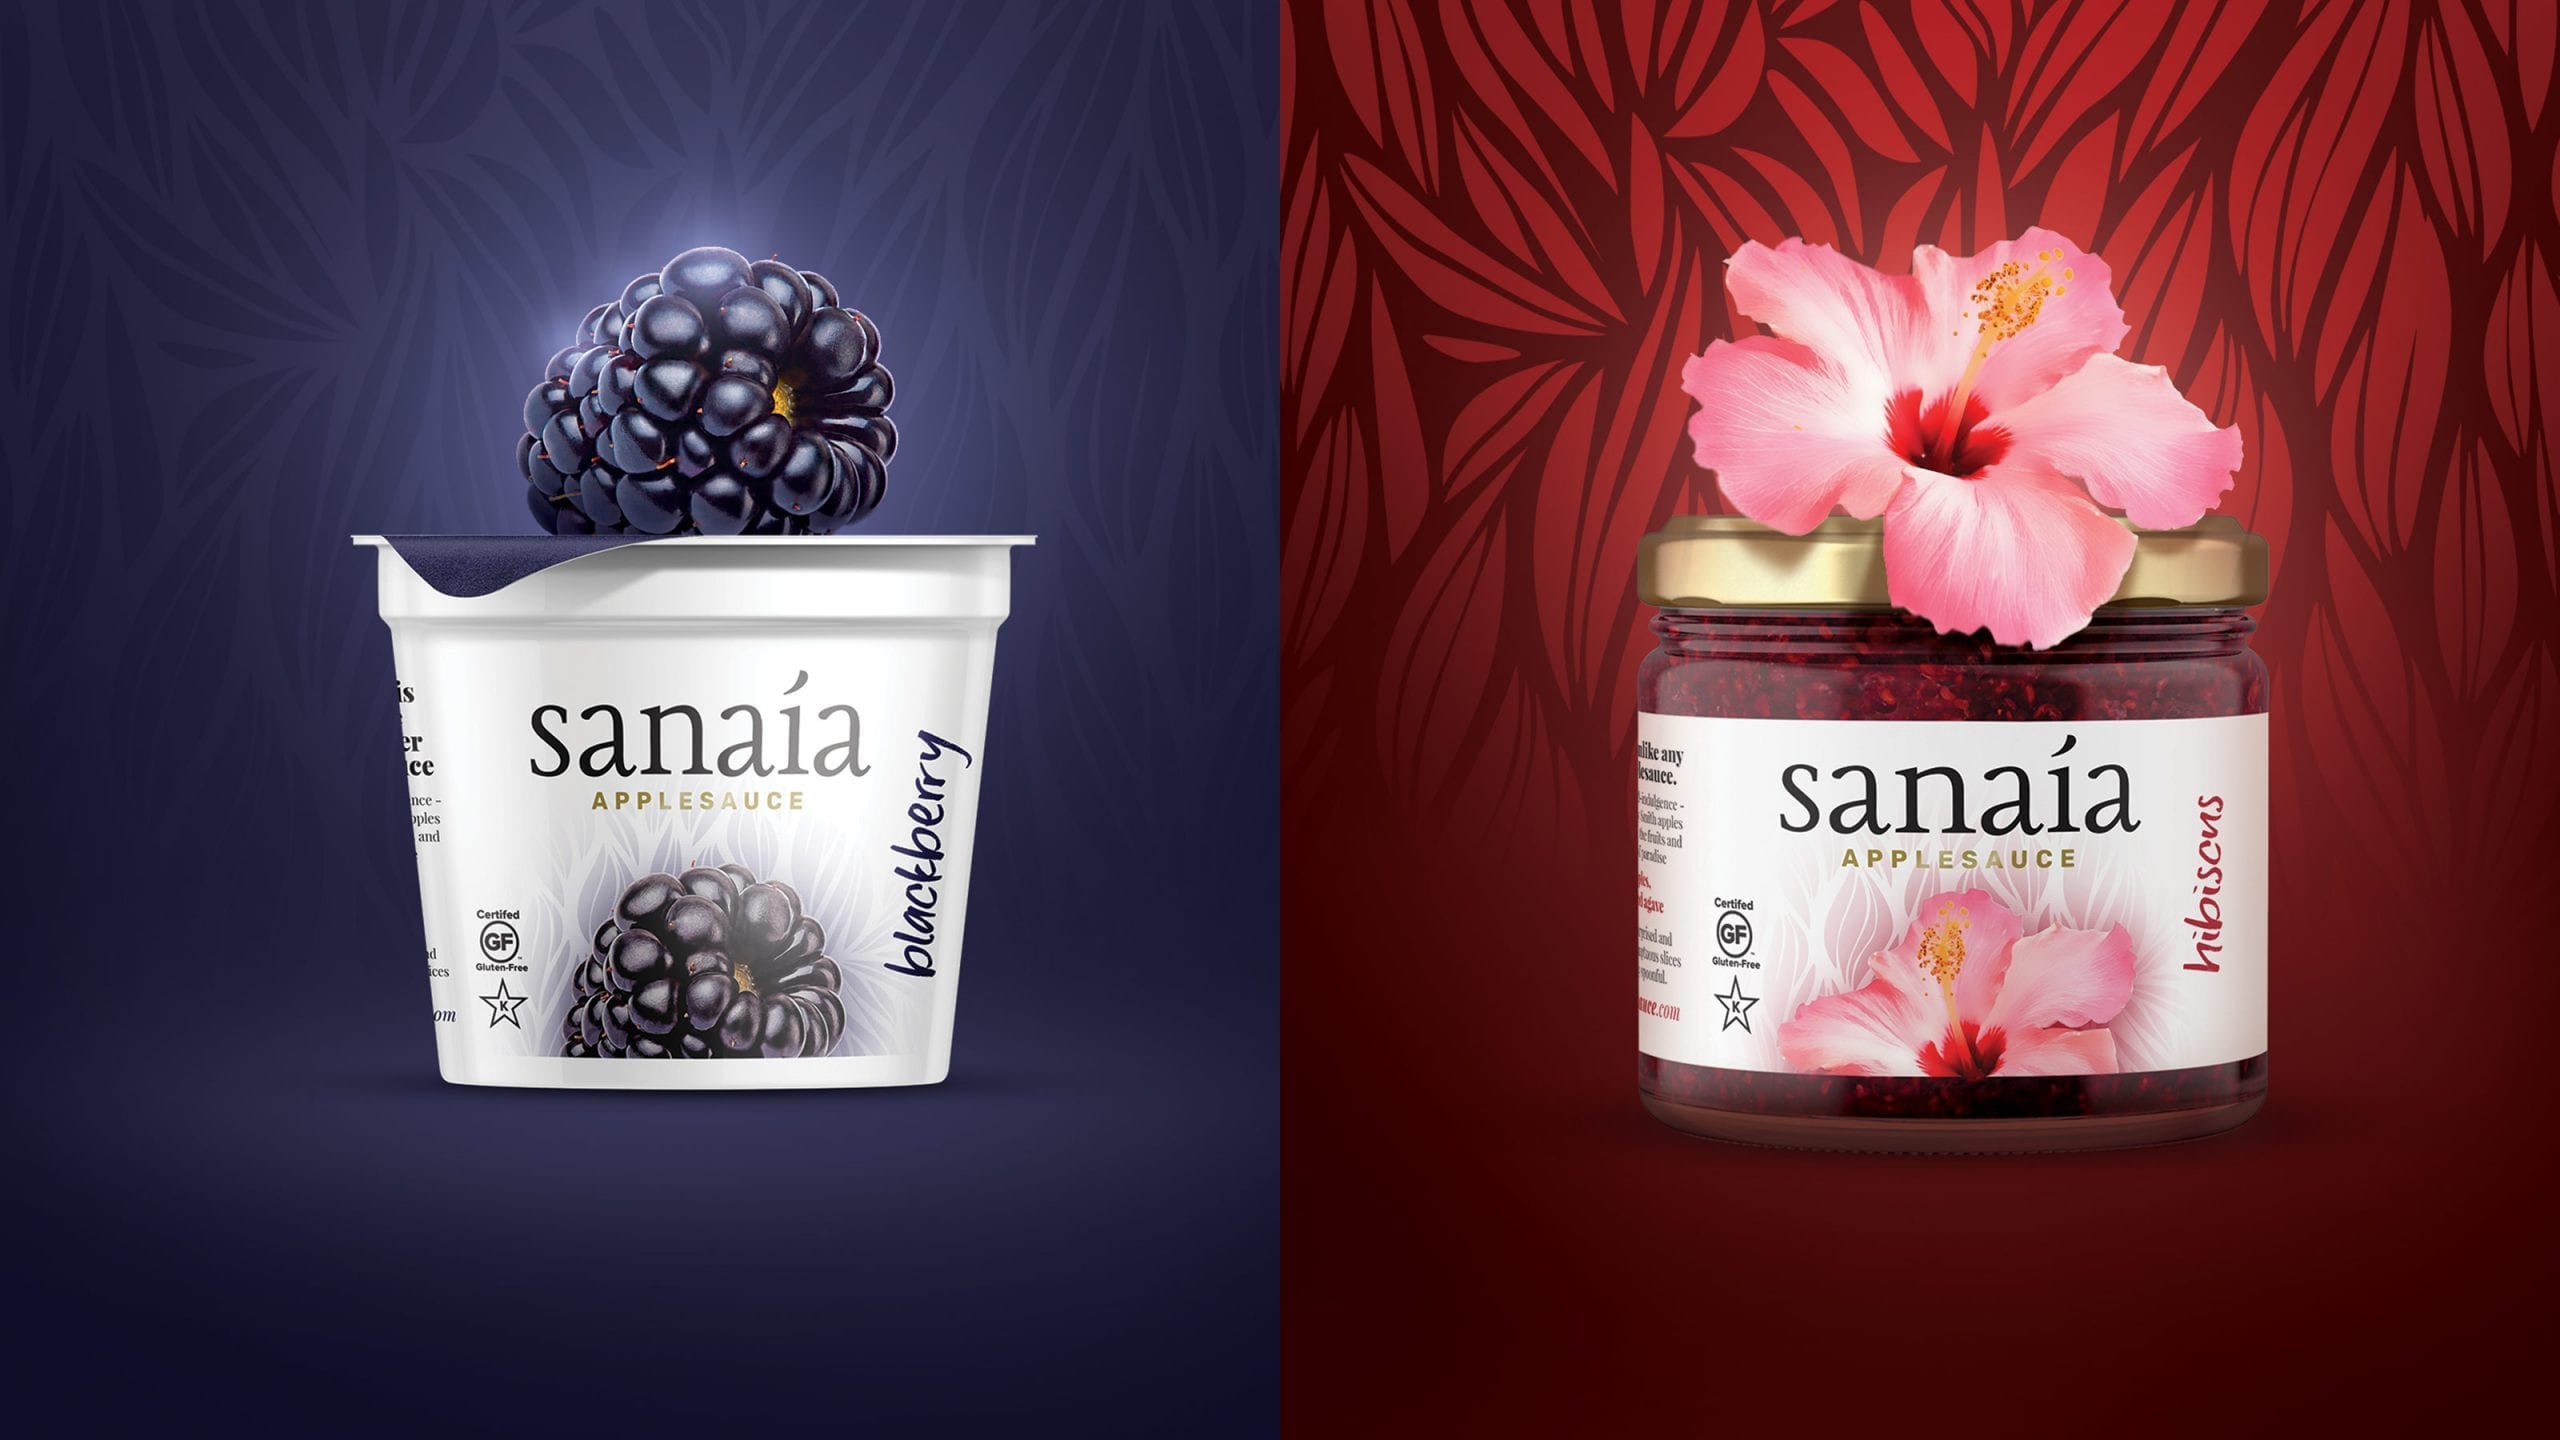 sanaia applesauce packaging design